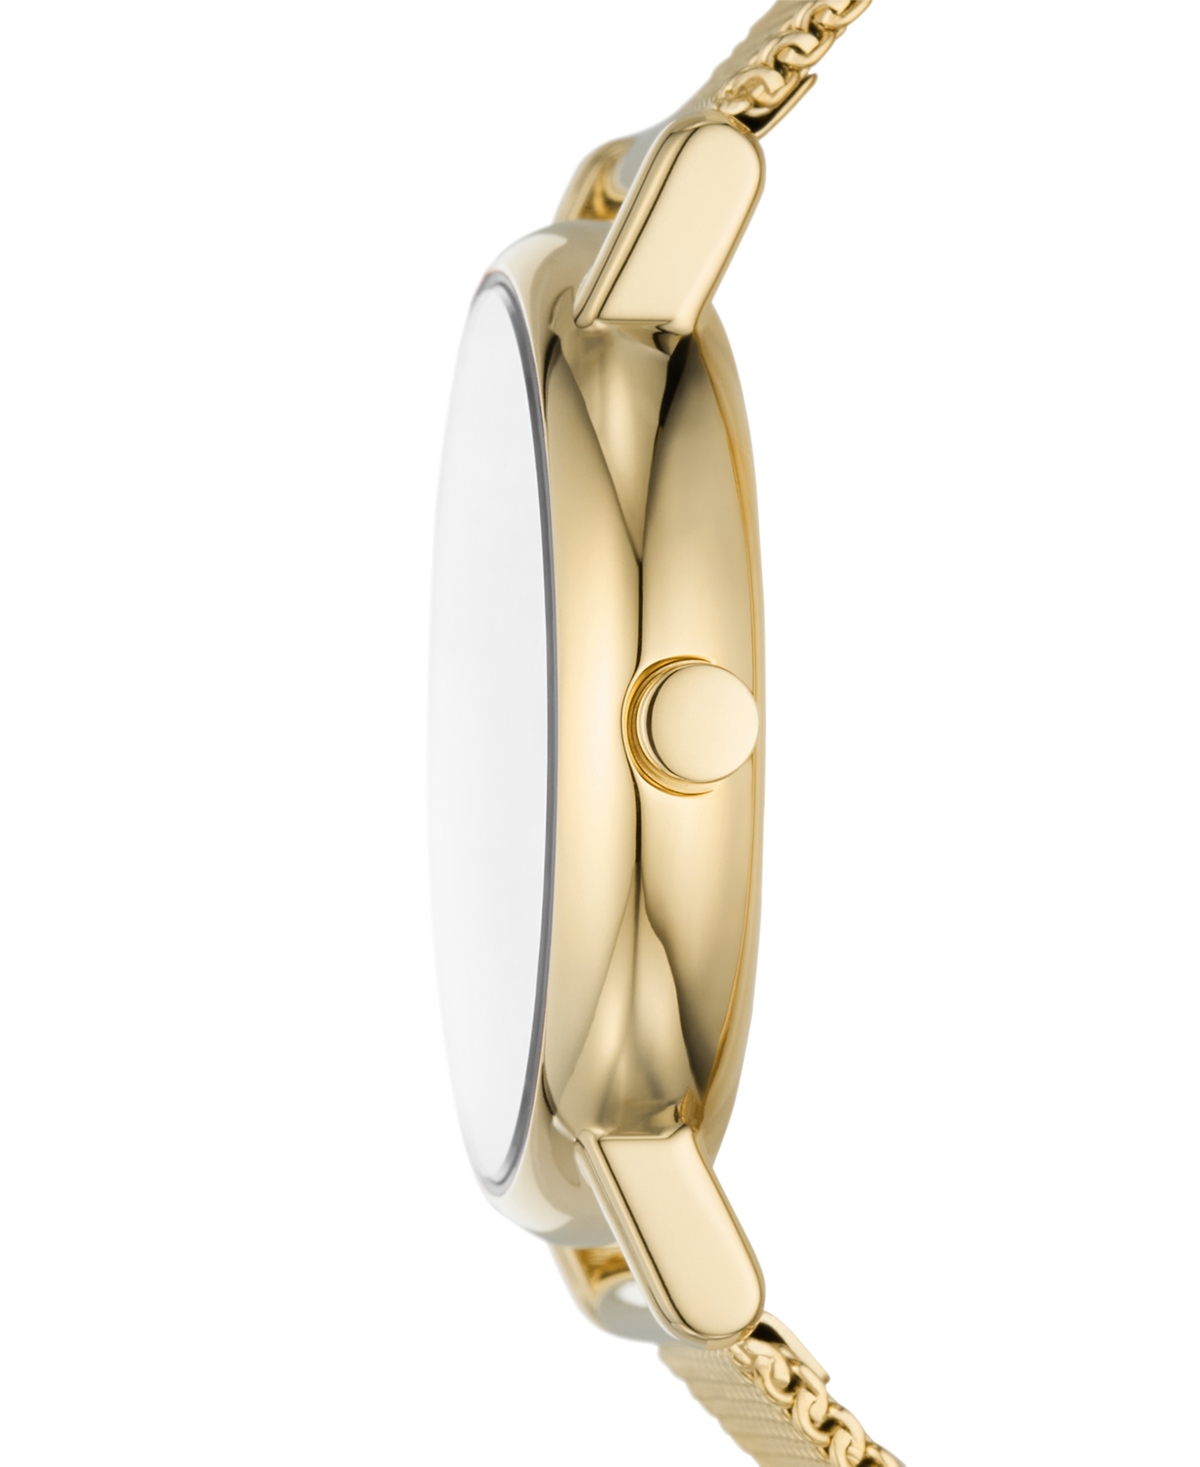 Shop Skagen Women's Signatur Lille Two Hand Gold-tone Stainless Steel Watch 30mm